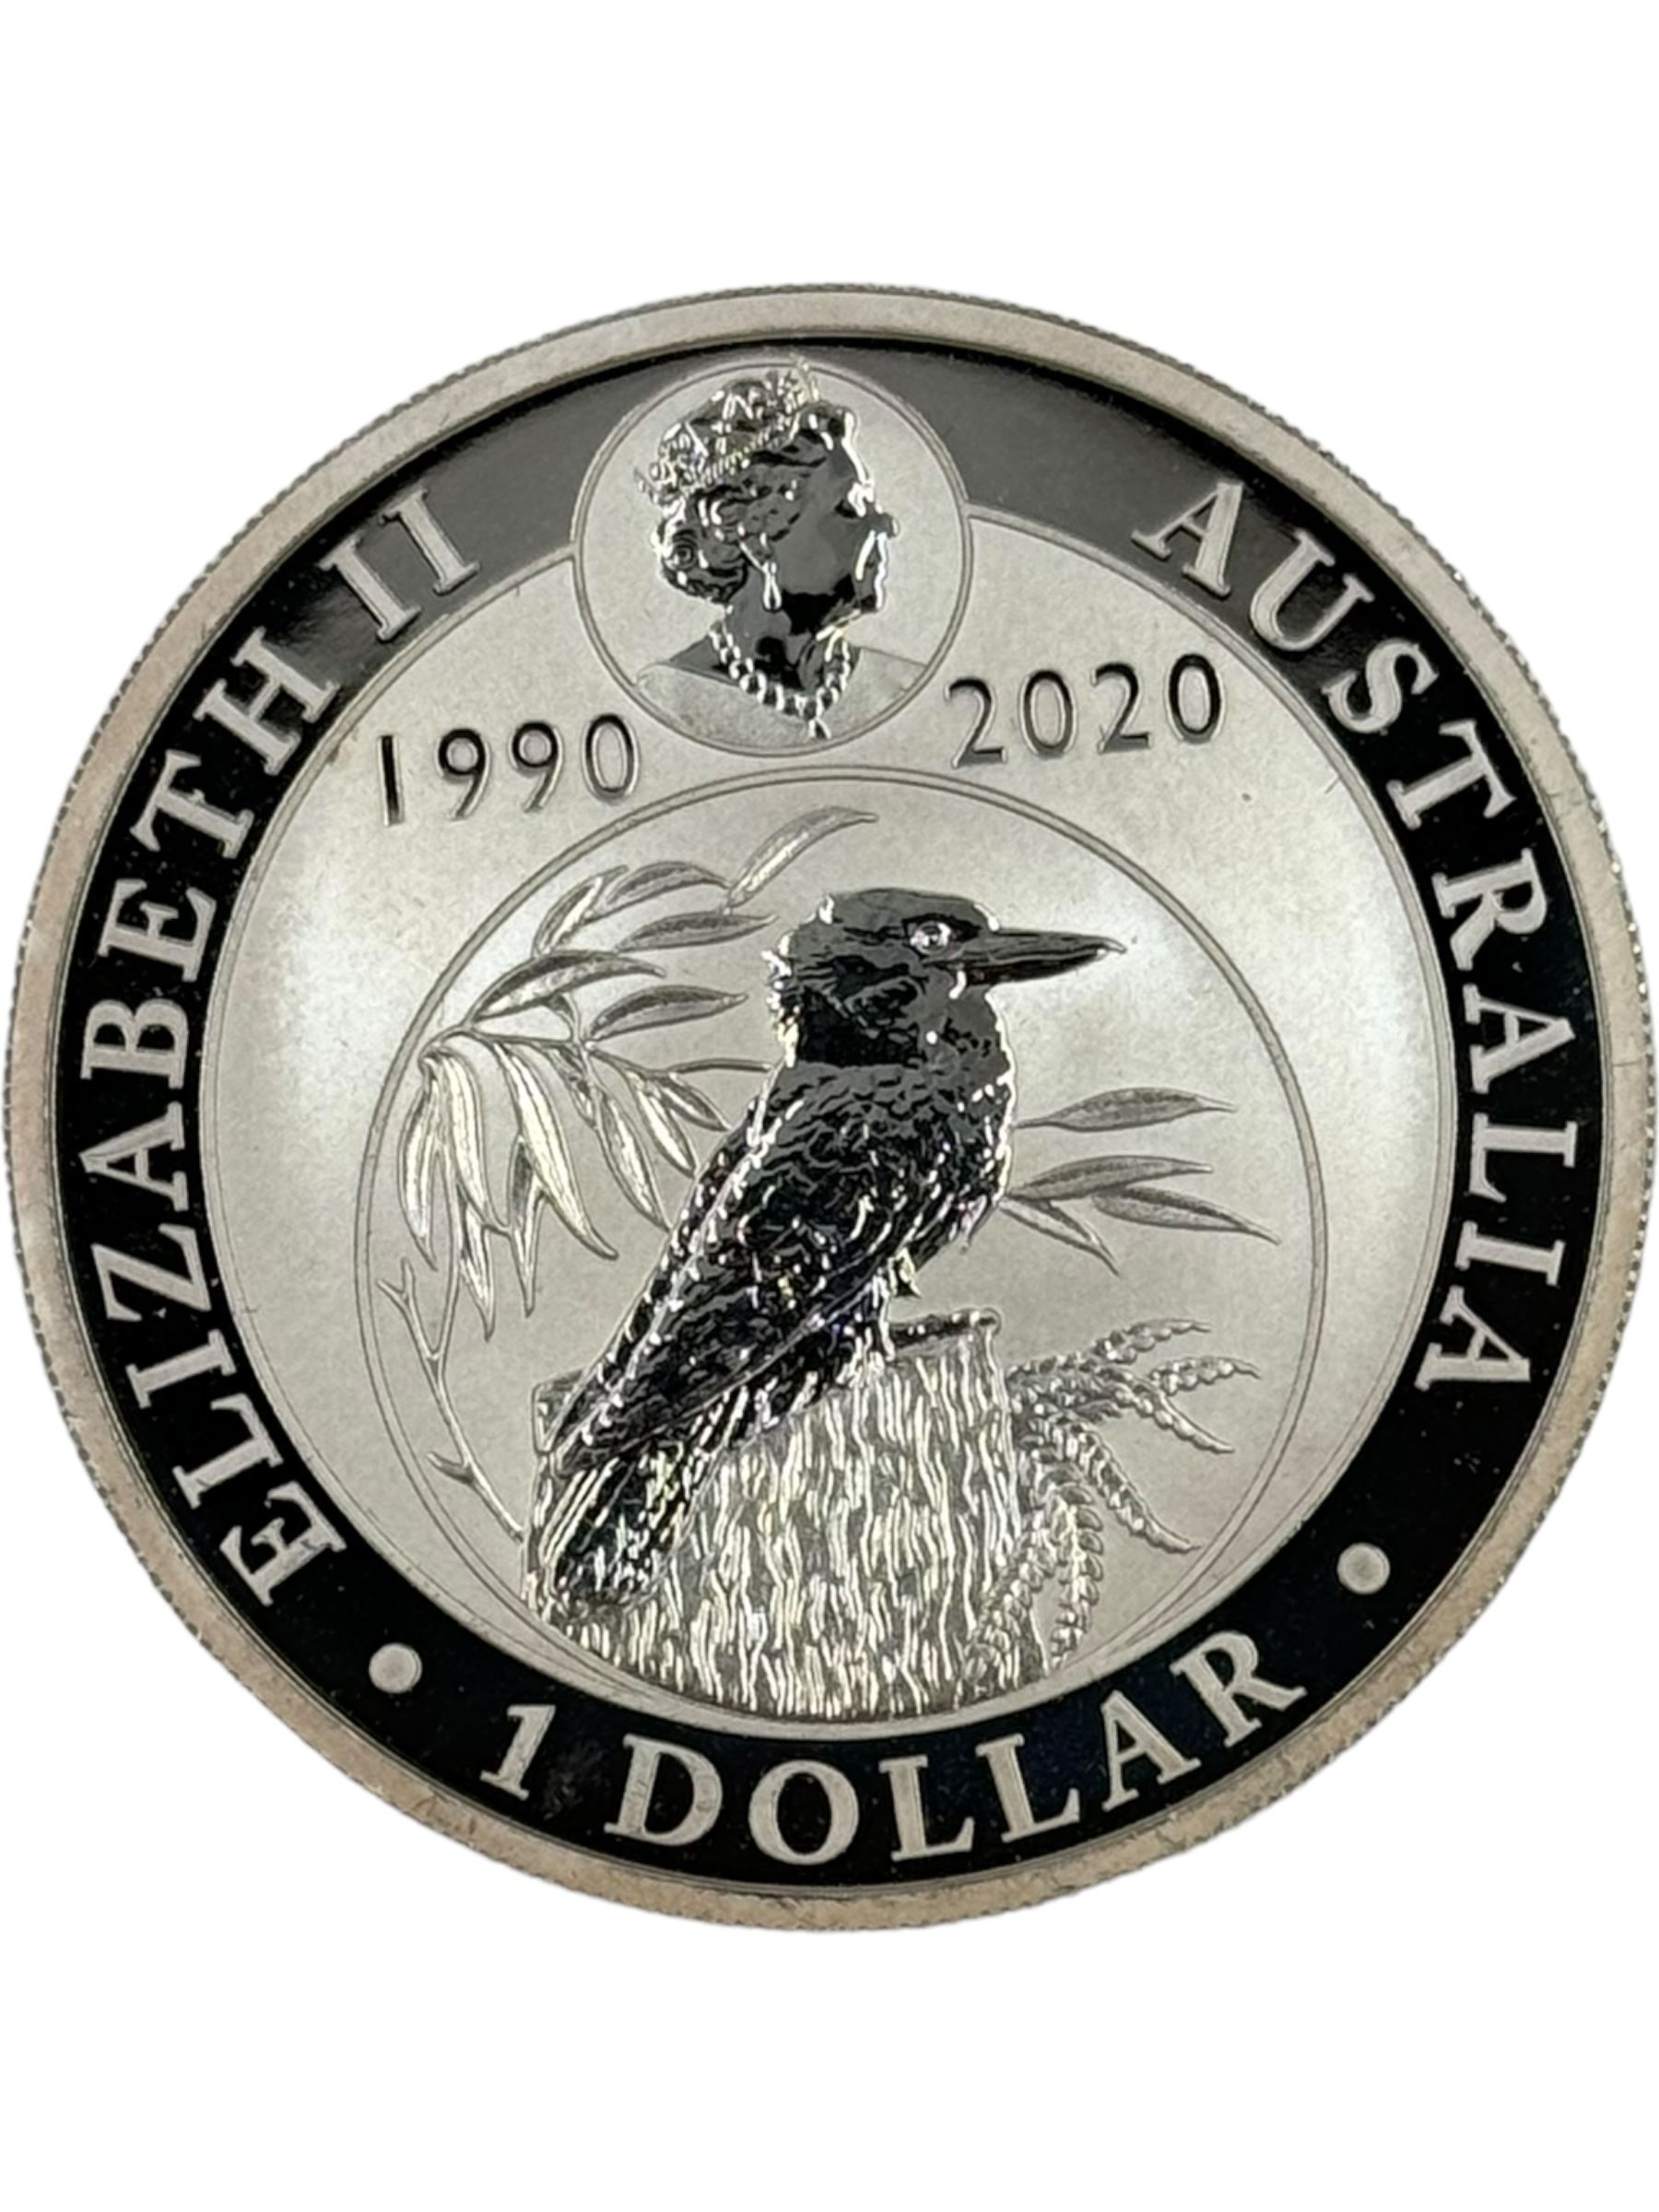 Nine Queen Elizabeth II Australia one ounce fine silver one dollar coins - Image 5 of 8